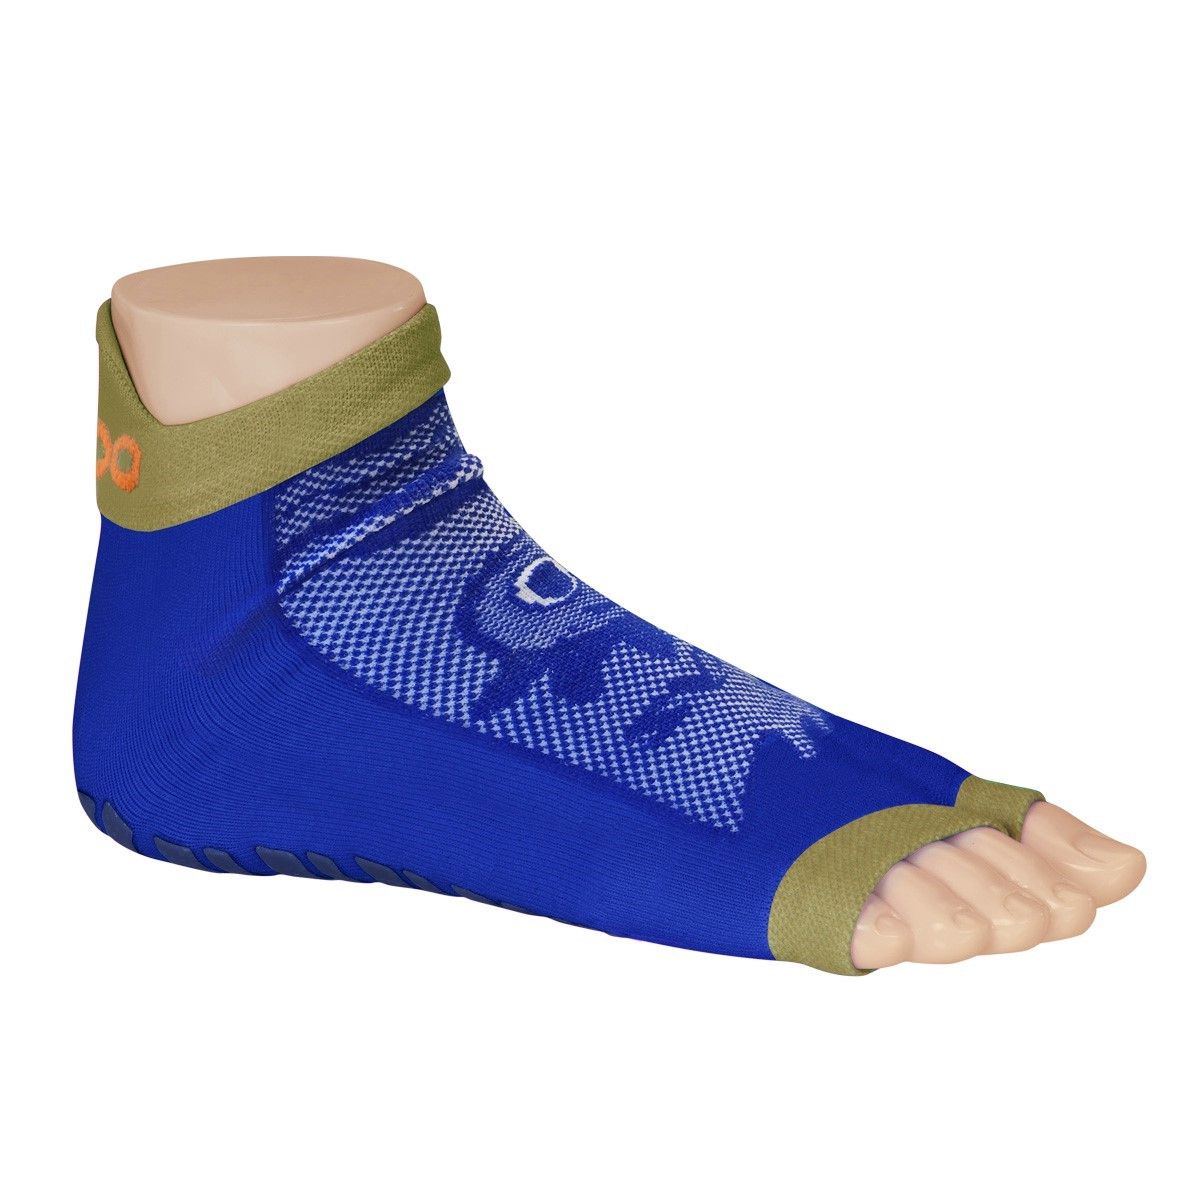 Sweakers Anti-Rutsch-Schwimm-Socken, blau, Größe 23-26